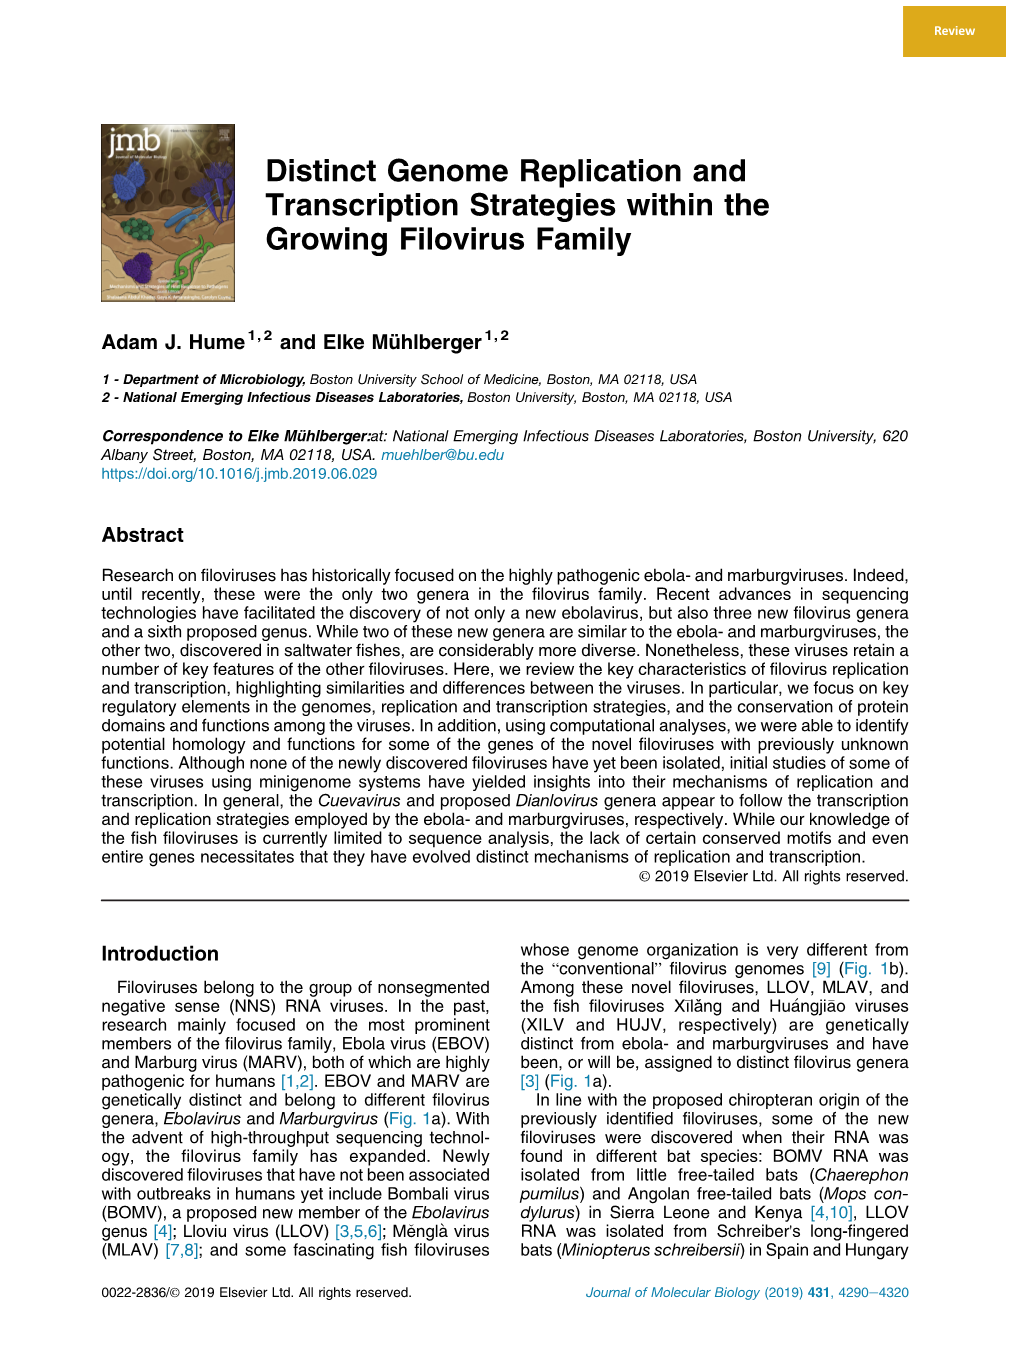 Distinct Genome Replication and Transcription Strategies Within the Growing Filovirus Family